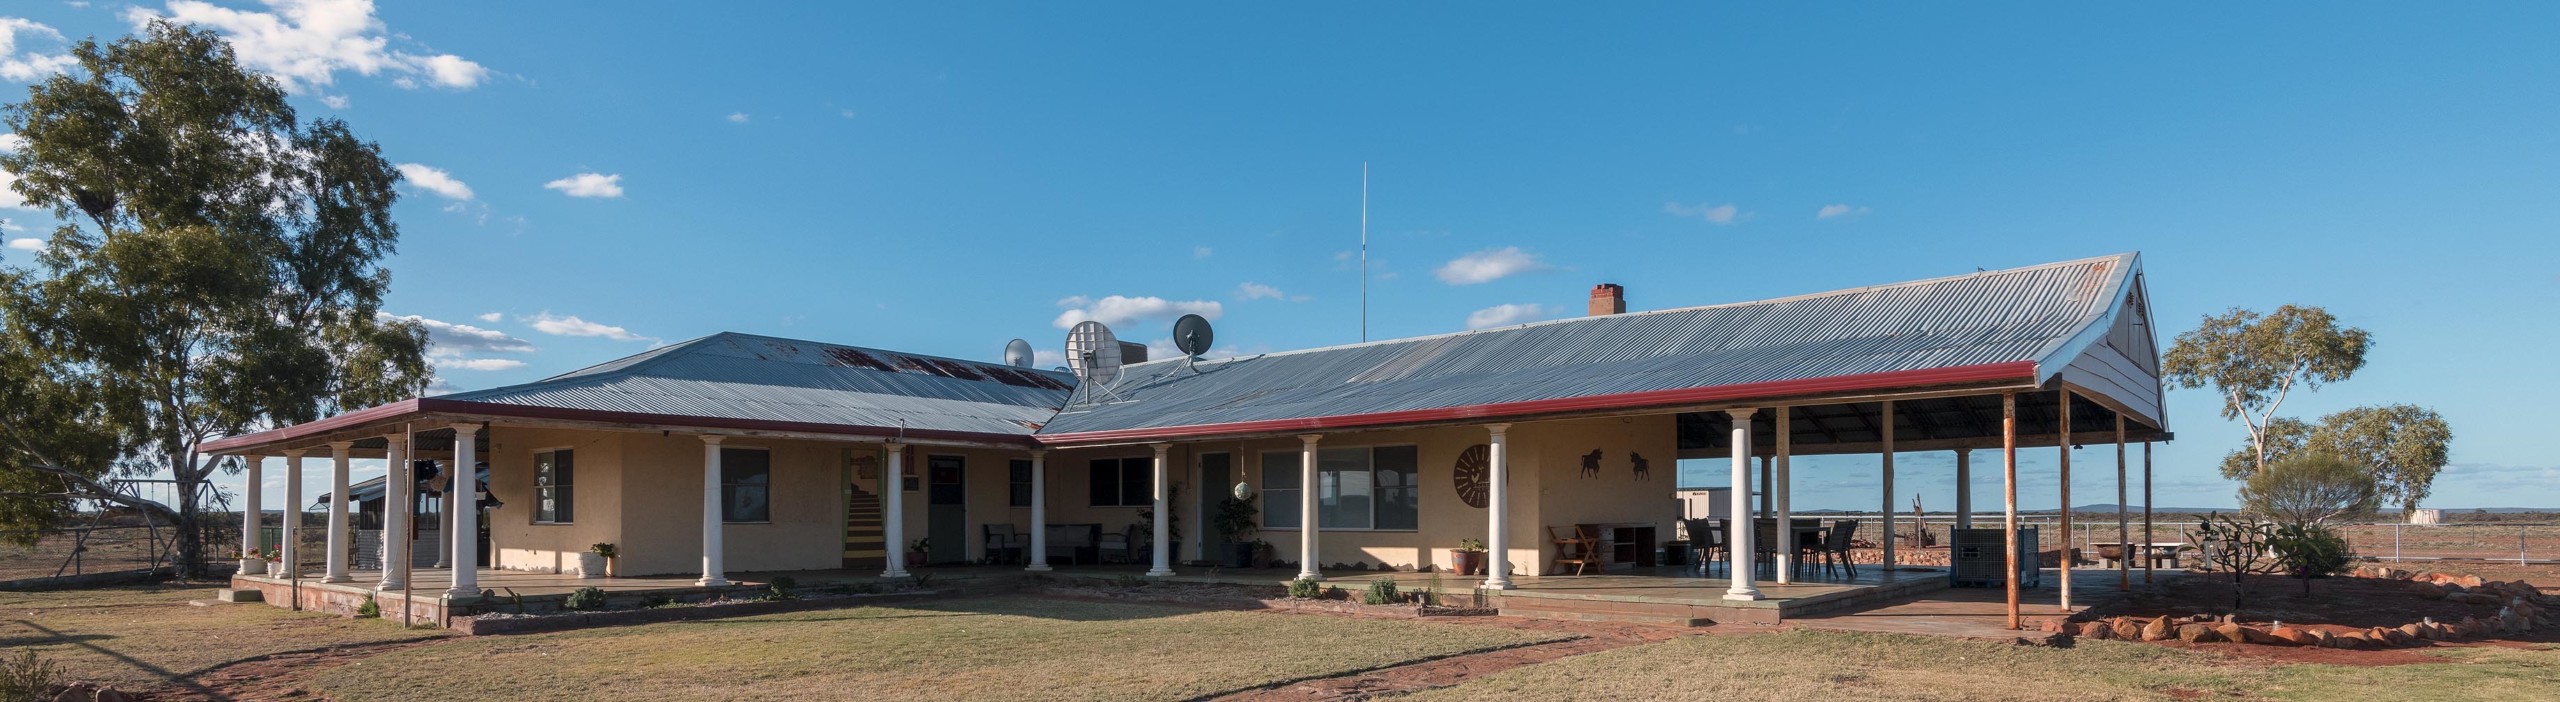 Historic homestead near the Yalgoo region offering accommodation